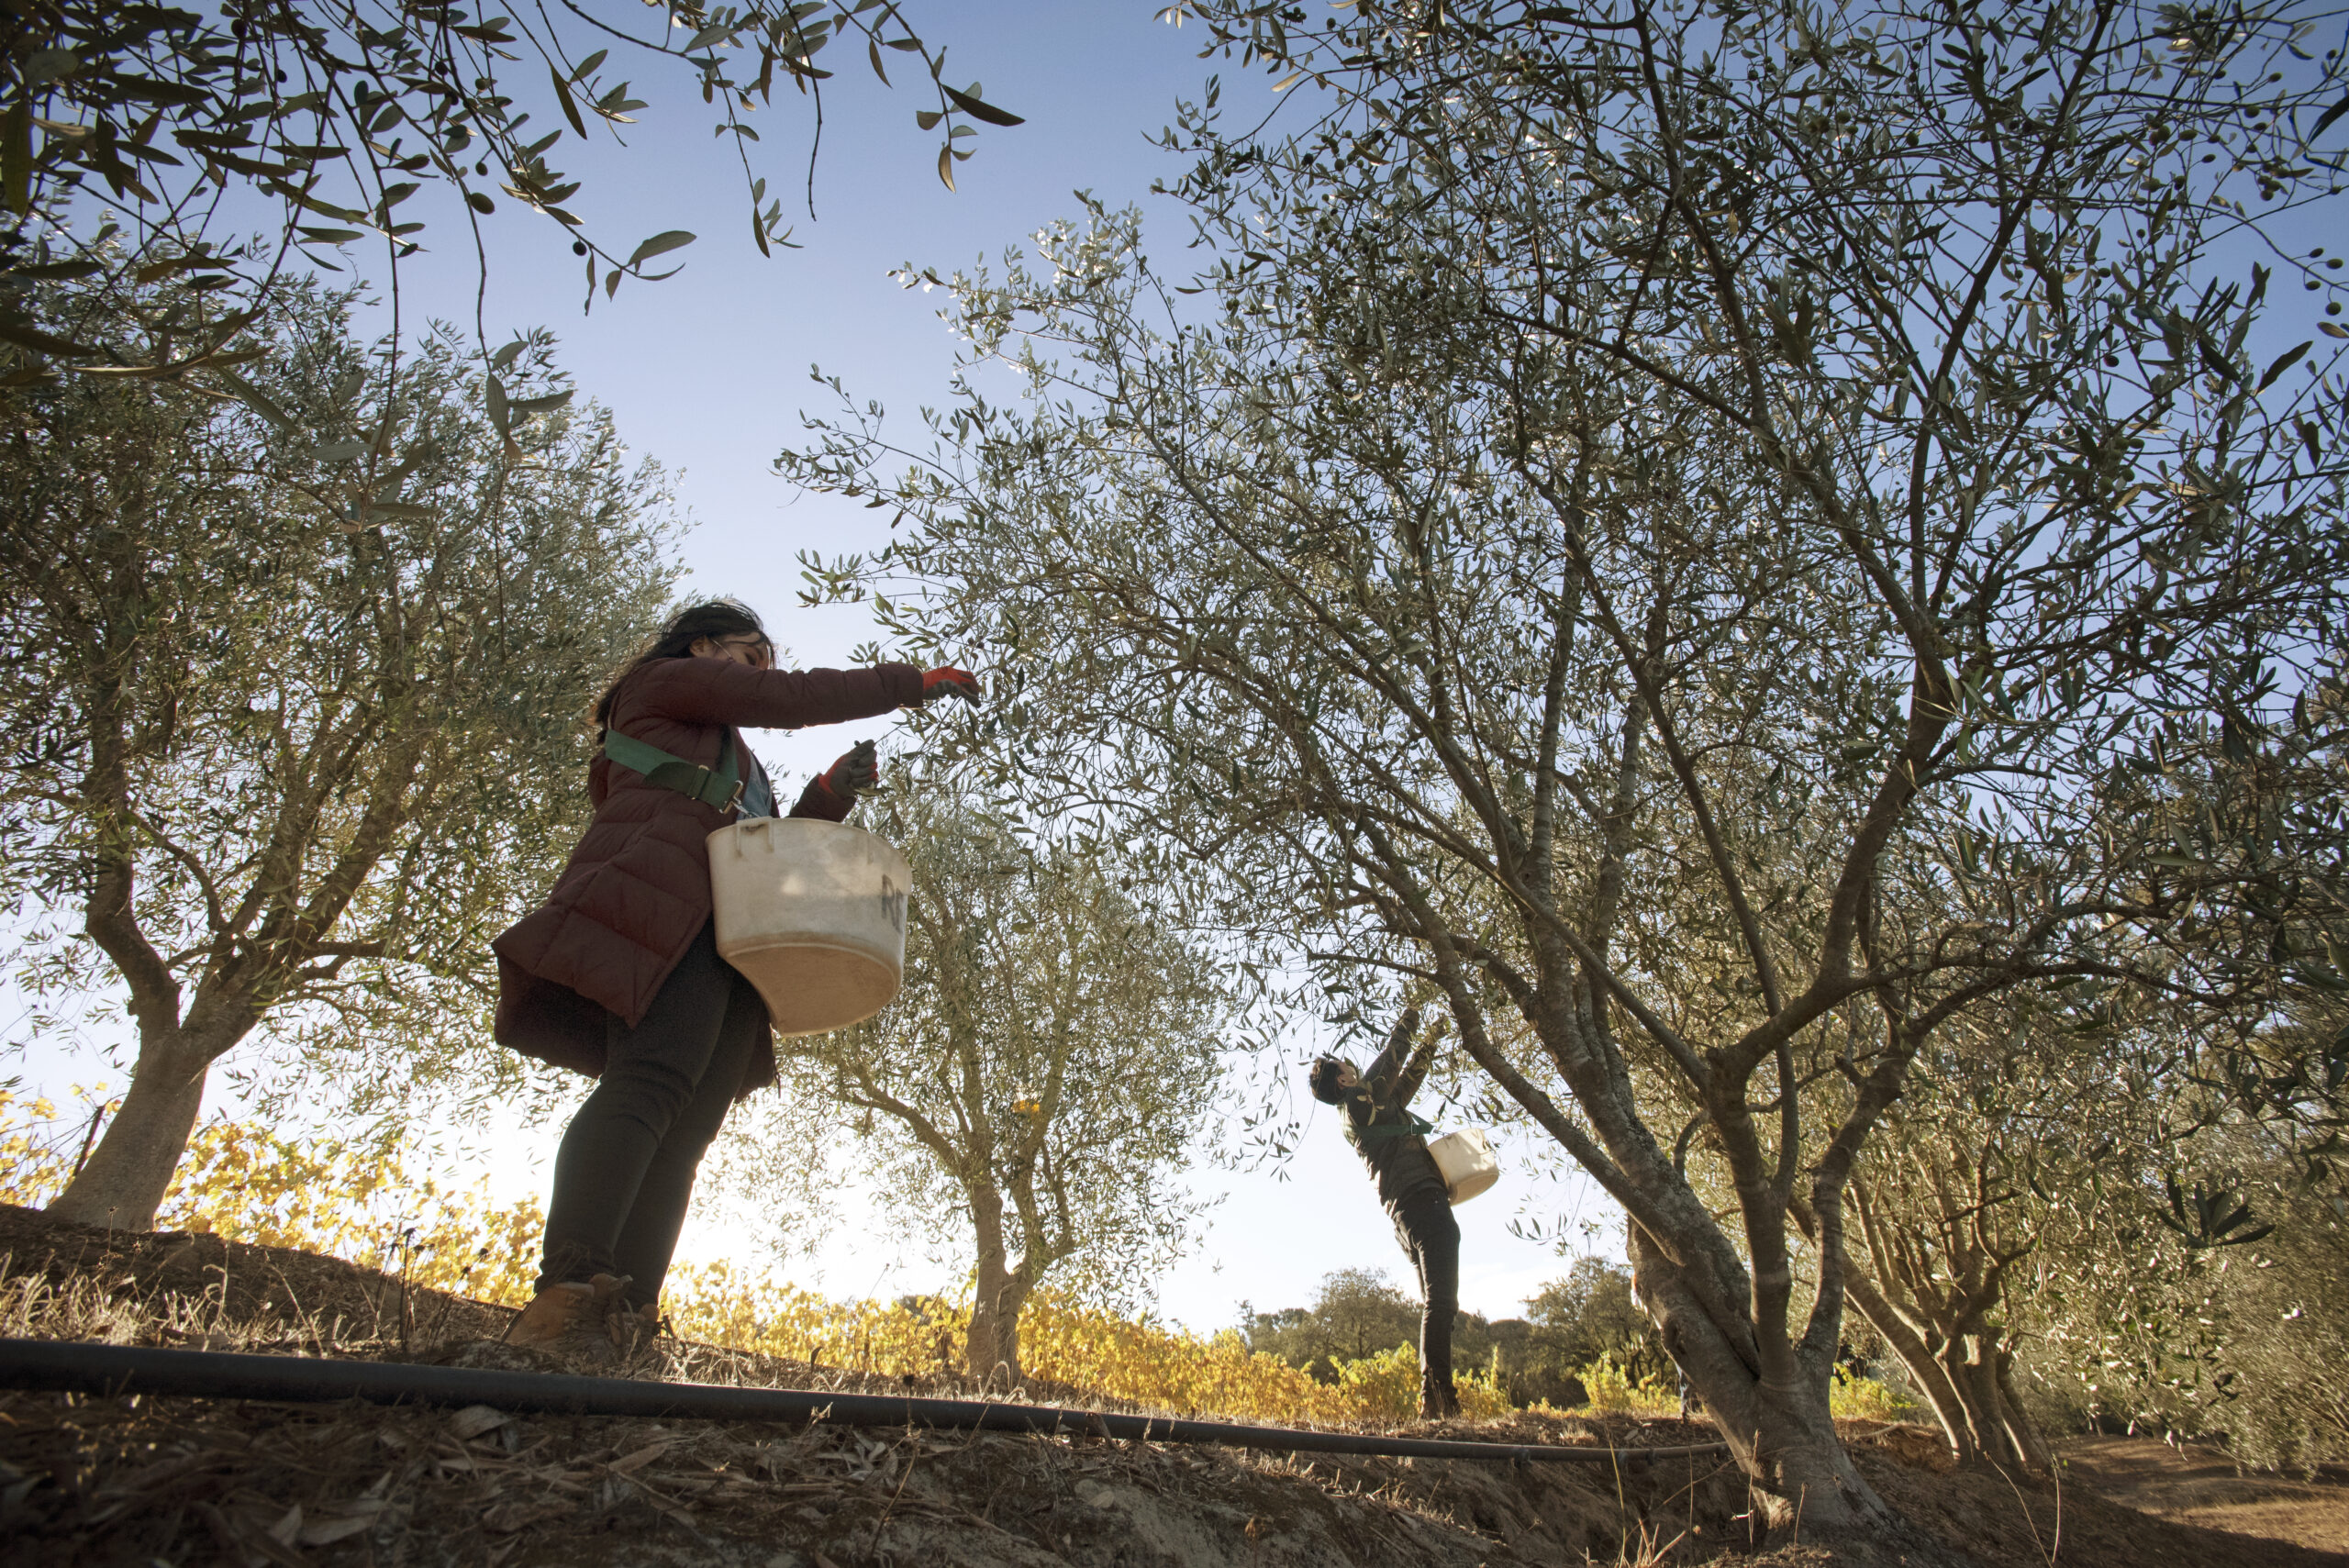 Ann Bui, left, and William Liow of Oakland, California volunteered to pick olives during olive harvest at Baker Lane Vineyards in Sebastopol, California, November 8, 2018. (Photo: Erik Castro/for Sonoma Magazine)